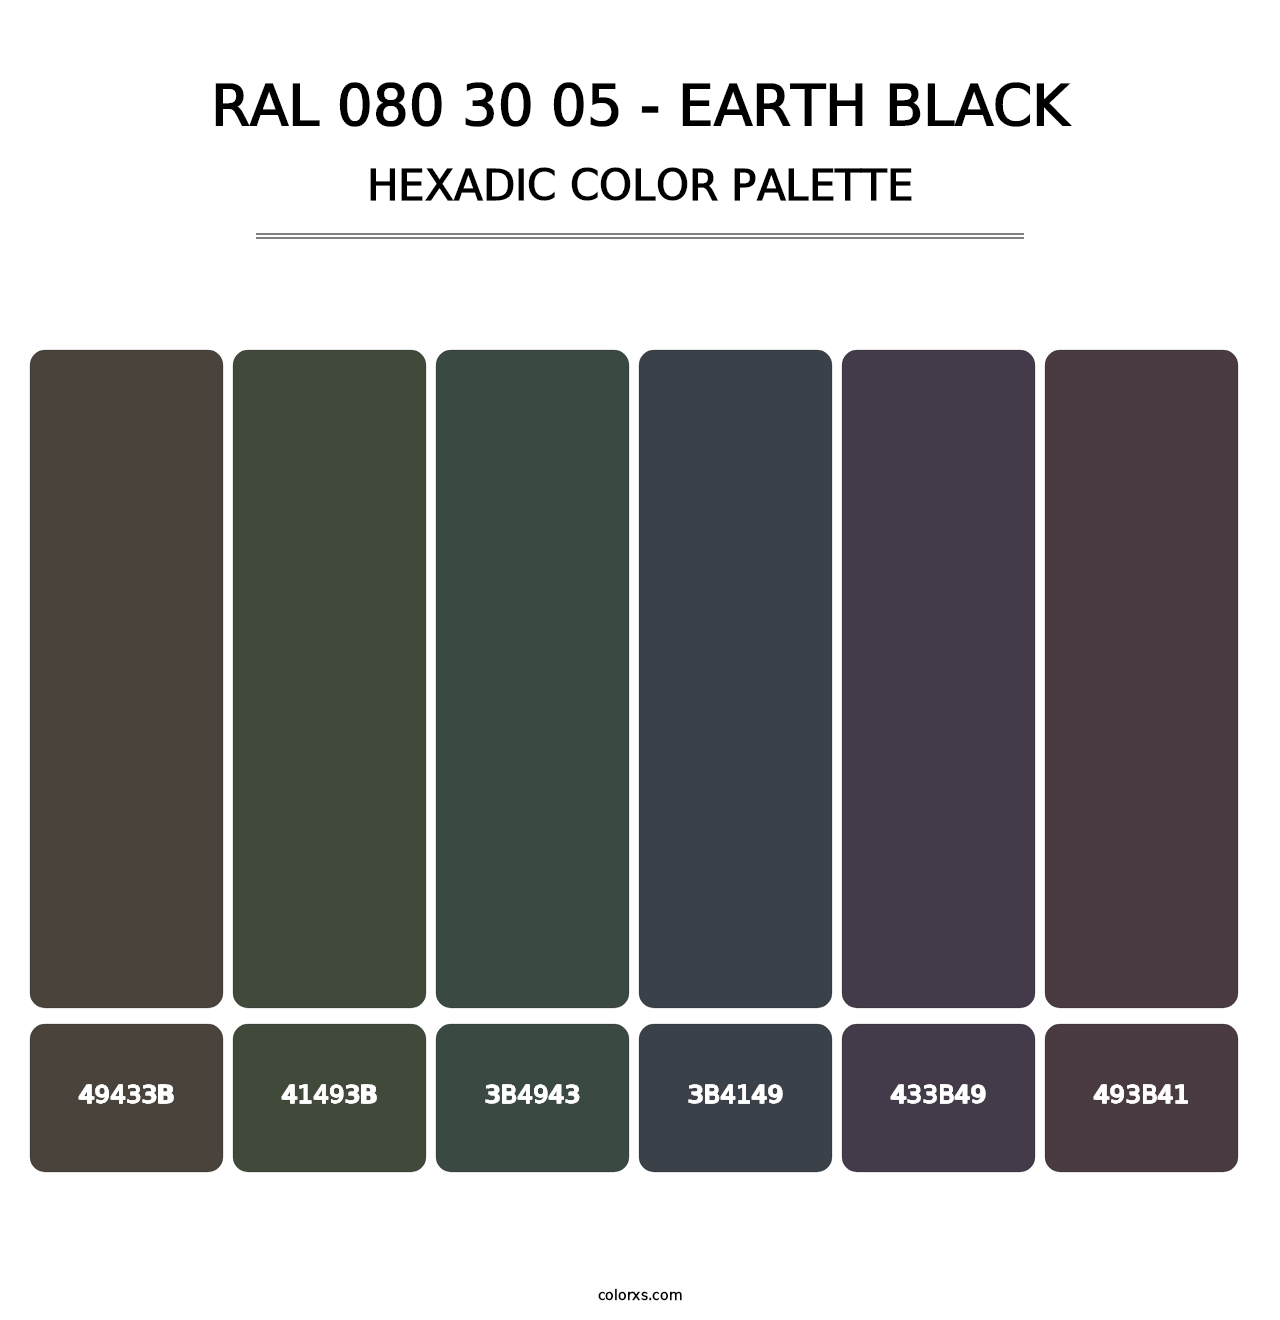 RAL 080 30 05 - Earth Black - Hexadic Color Palette